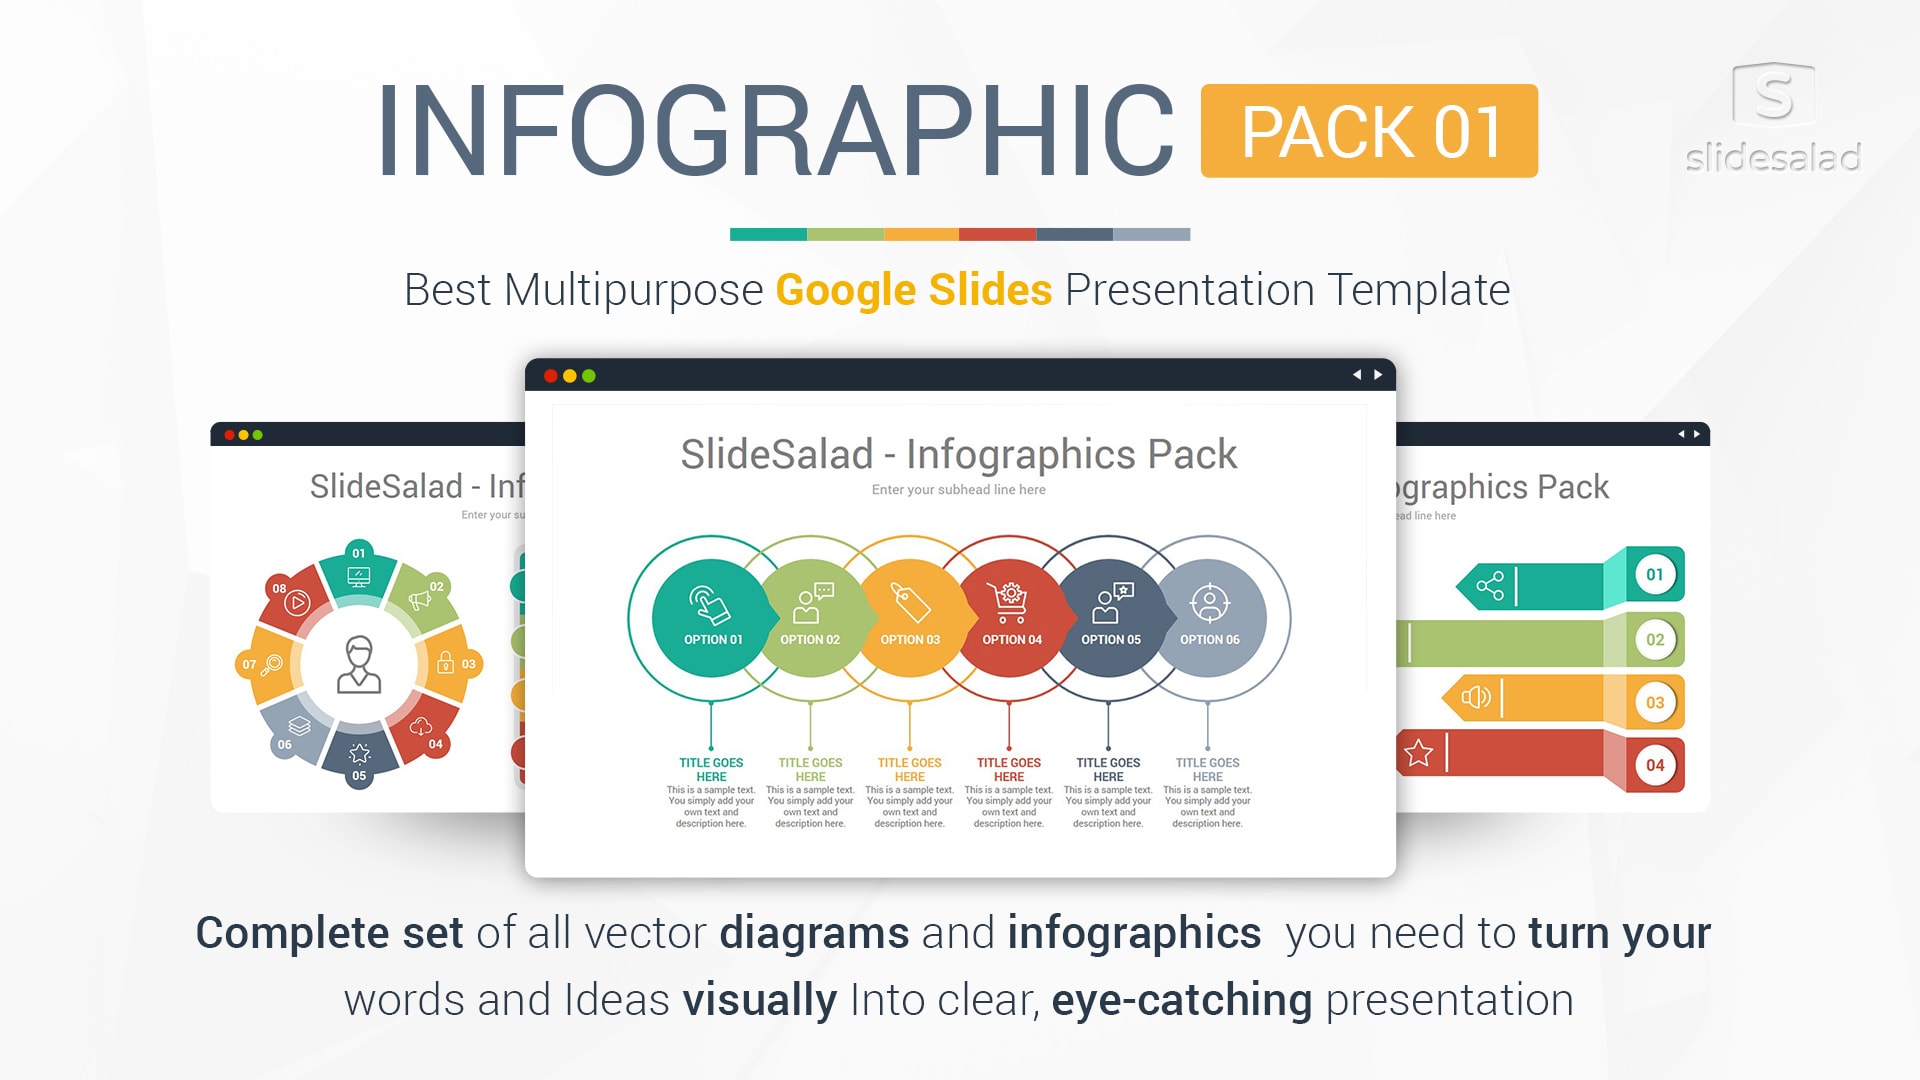 SlideSalad Infographic Pack 01 Google Slides Template - A Complete Set of Infographics for Multipurpose Presentation Needs